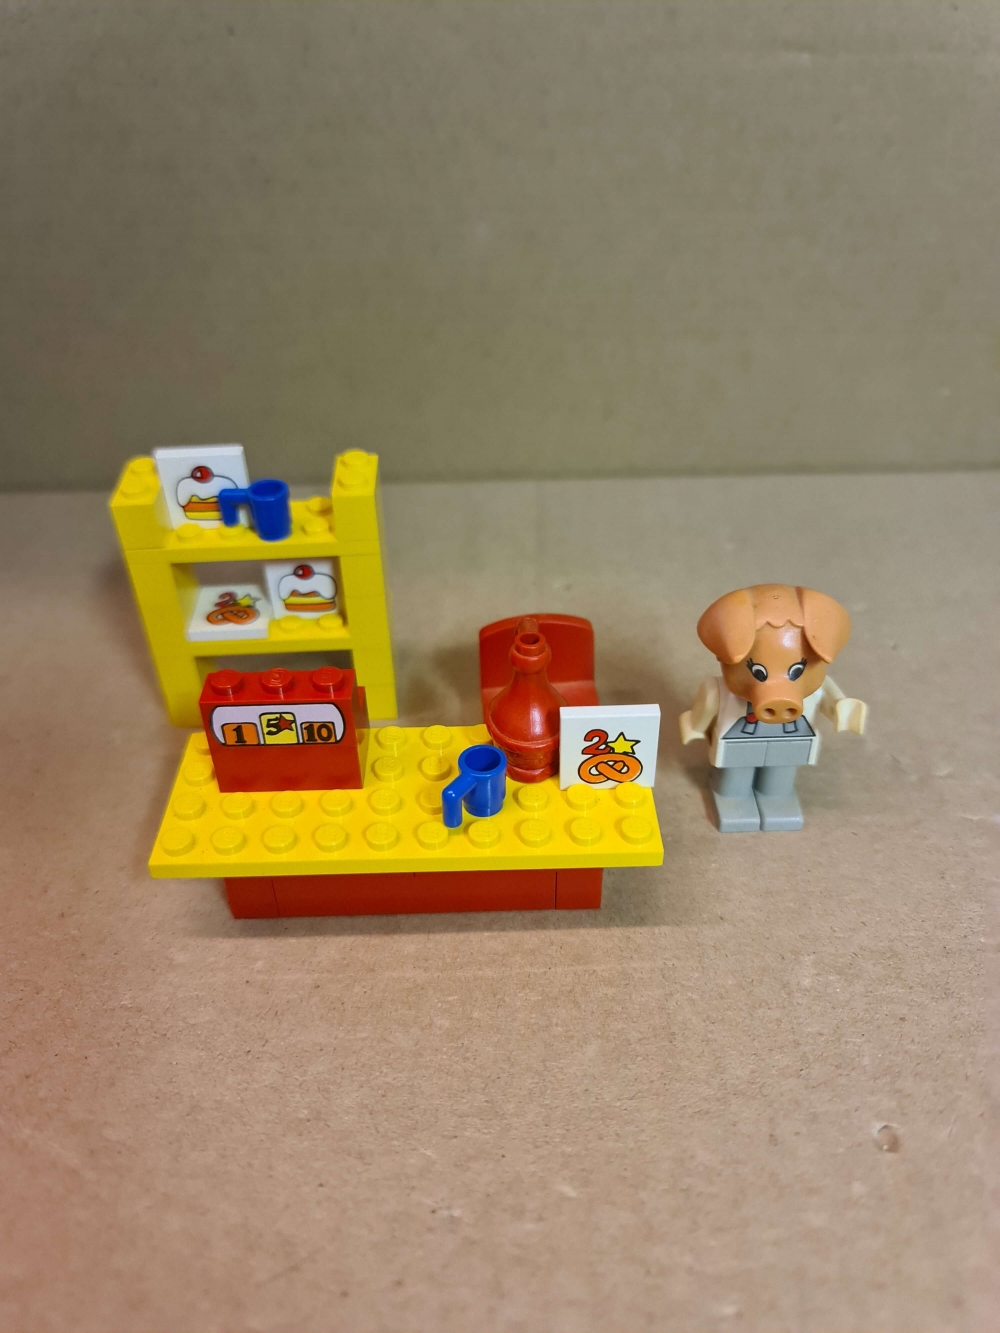 Sett 3796 fra Lego Fabuland serien.
Fint sett. 
Komplett uten manual.